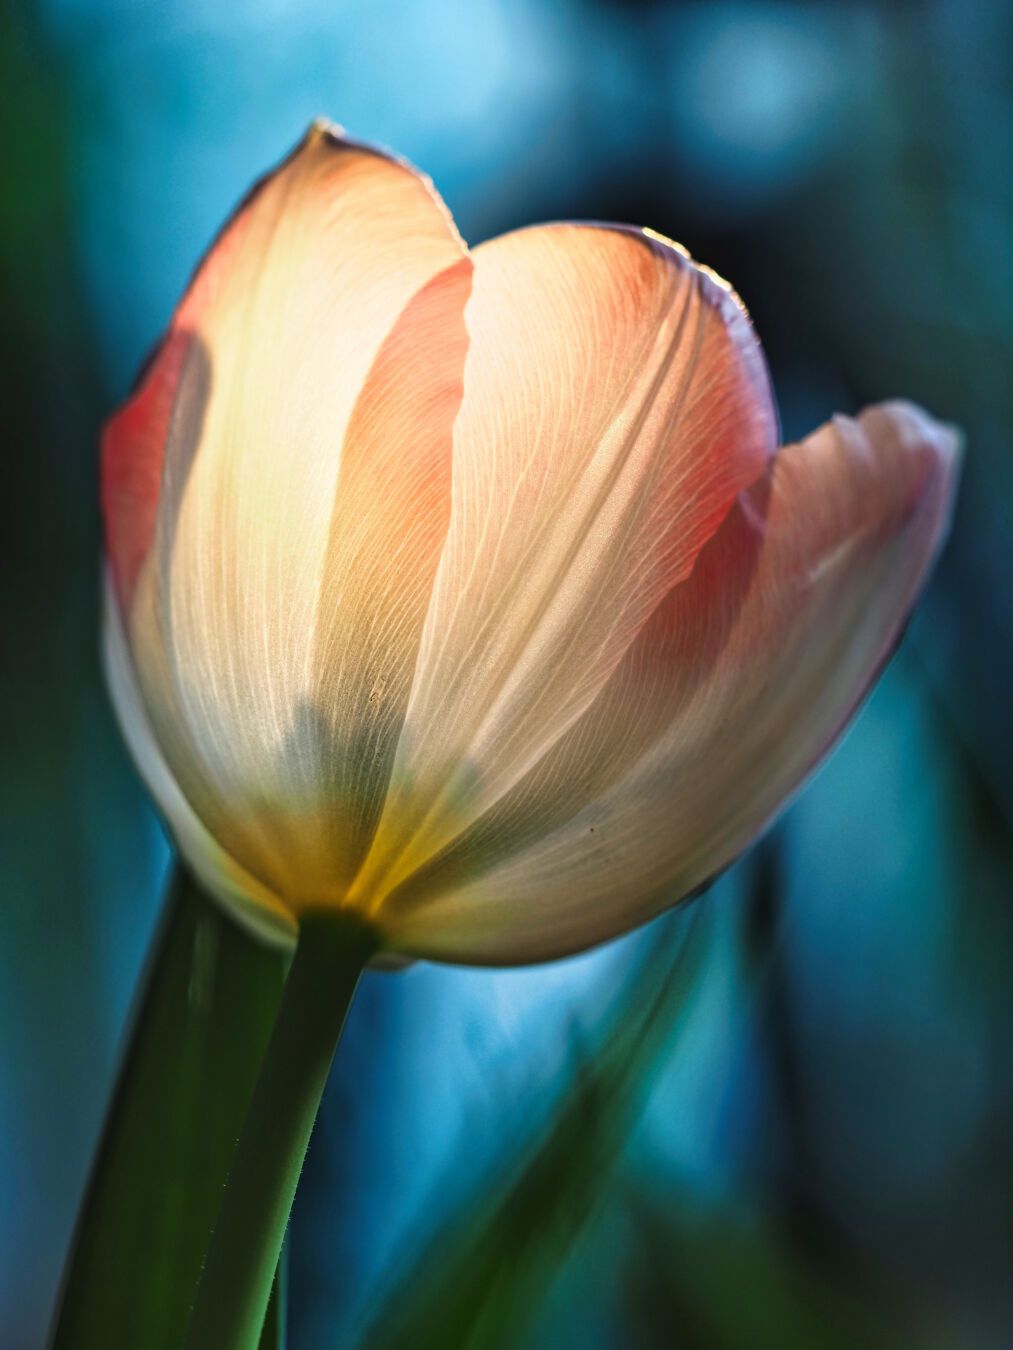 study of a tulip blossom

#flower #flowerpower #springmood #makro #macrophotography #tulipmania